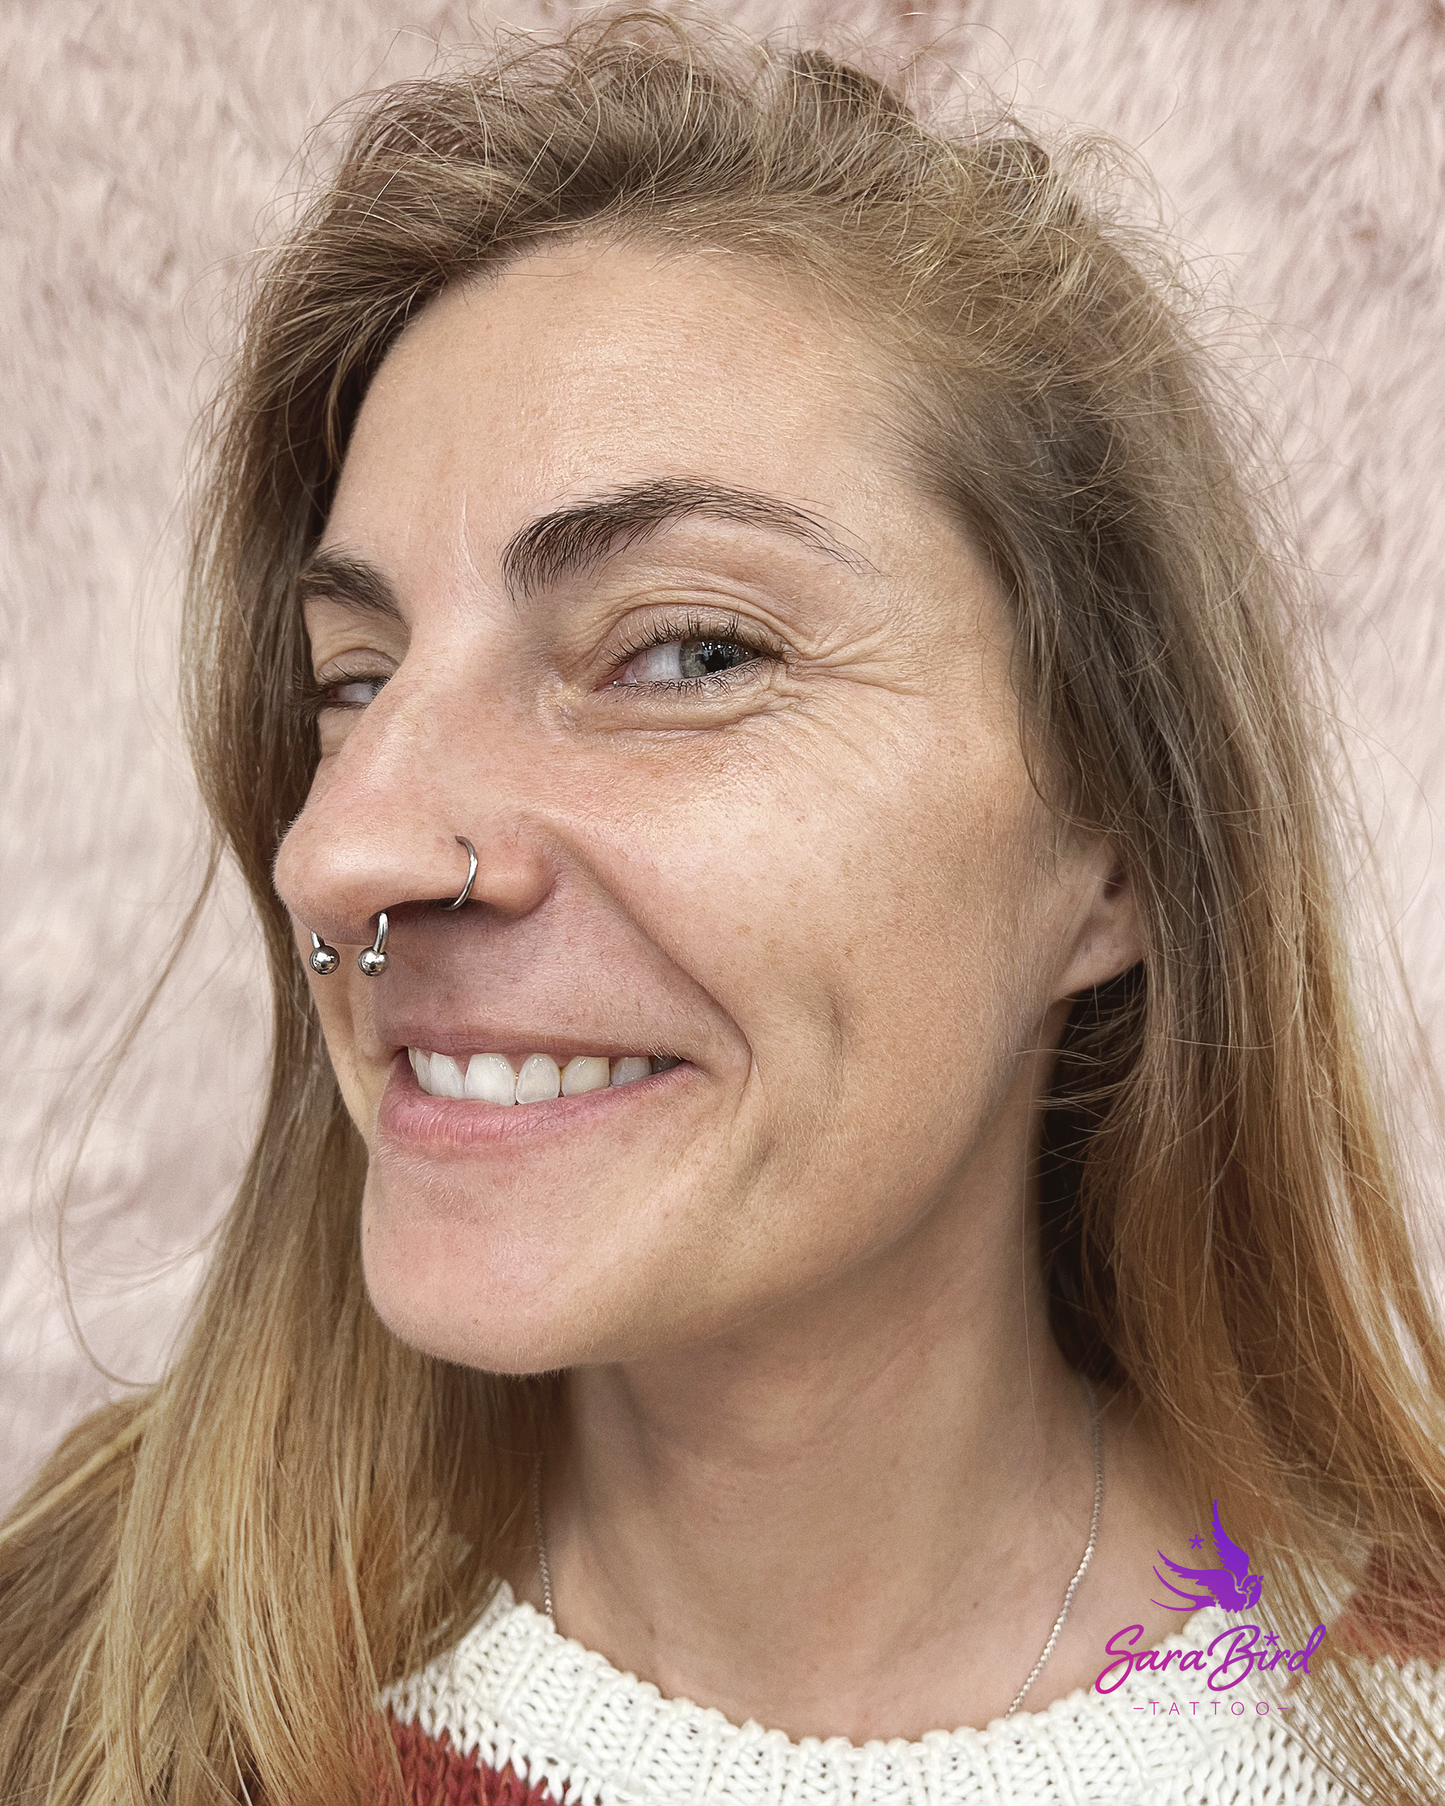 Piercing de nariz enjoyado de titanio + anestésico